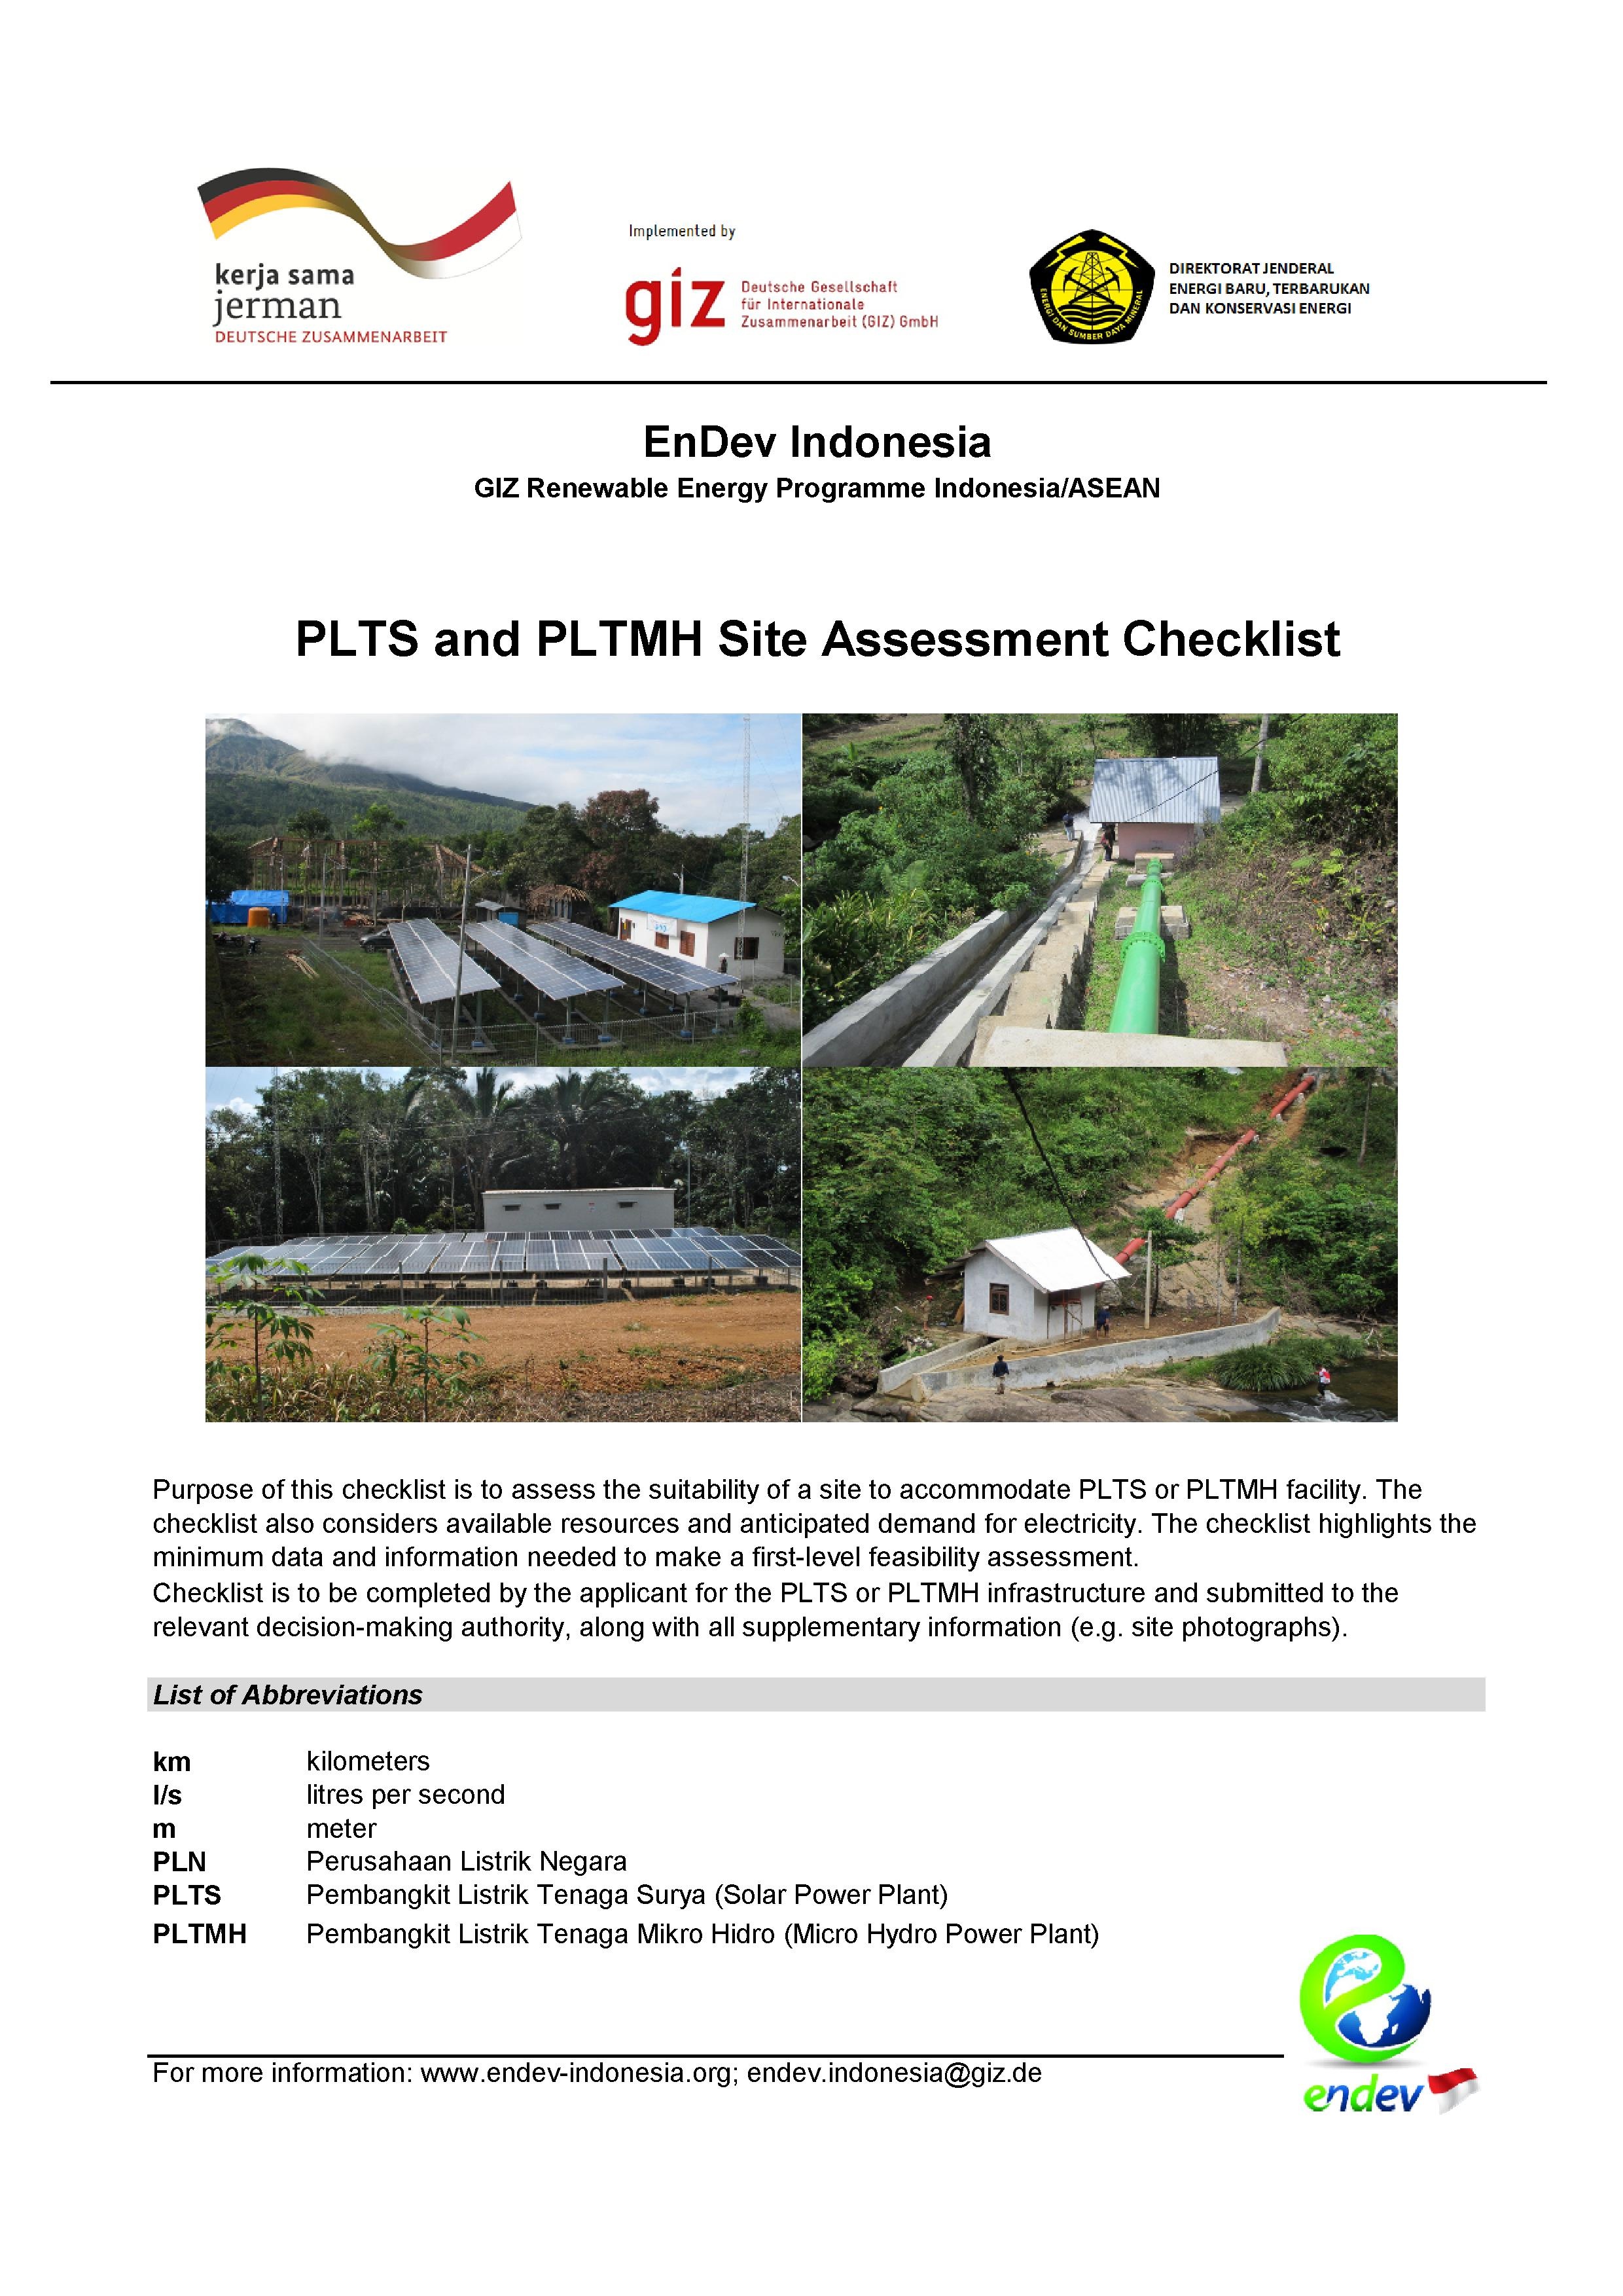 GIZ EnDev (2014) "EnDev Indonesia Site Criteria Checklist"